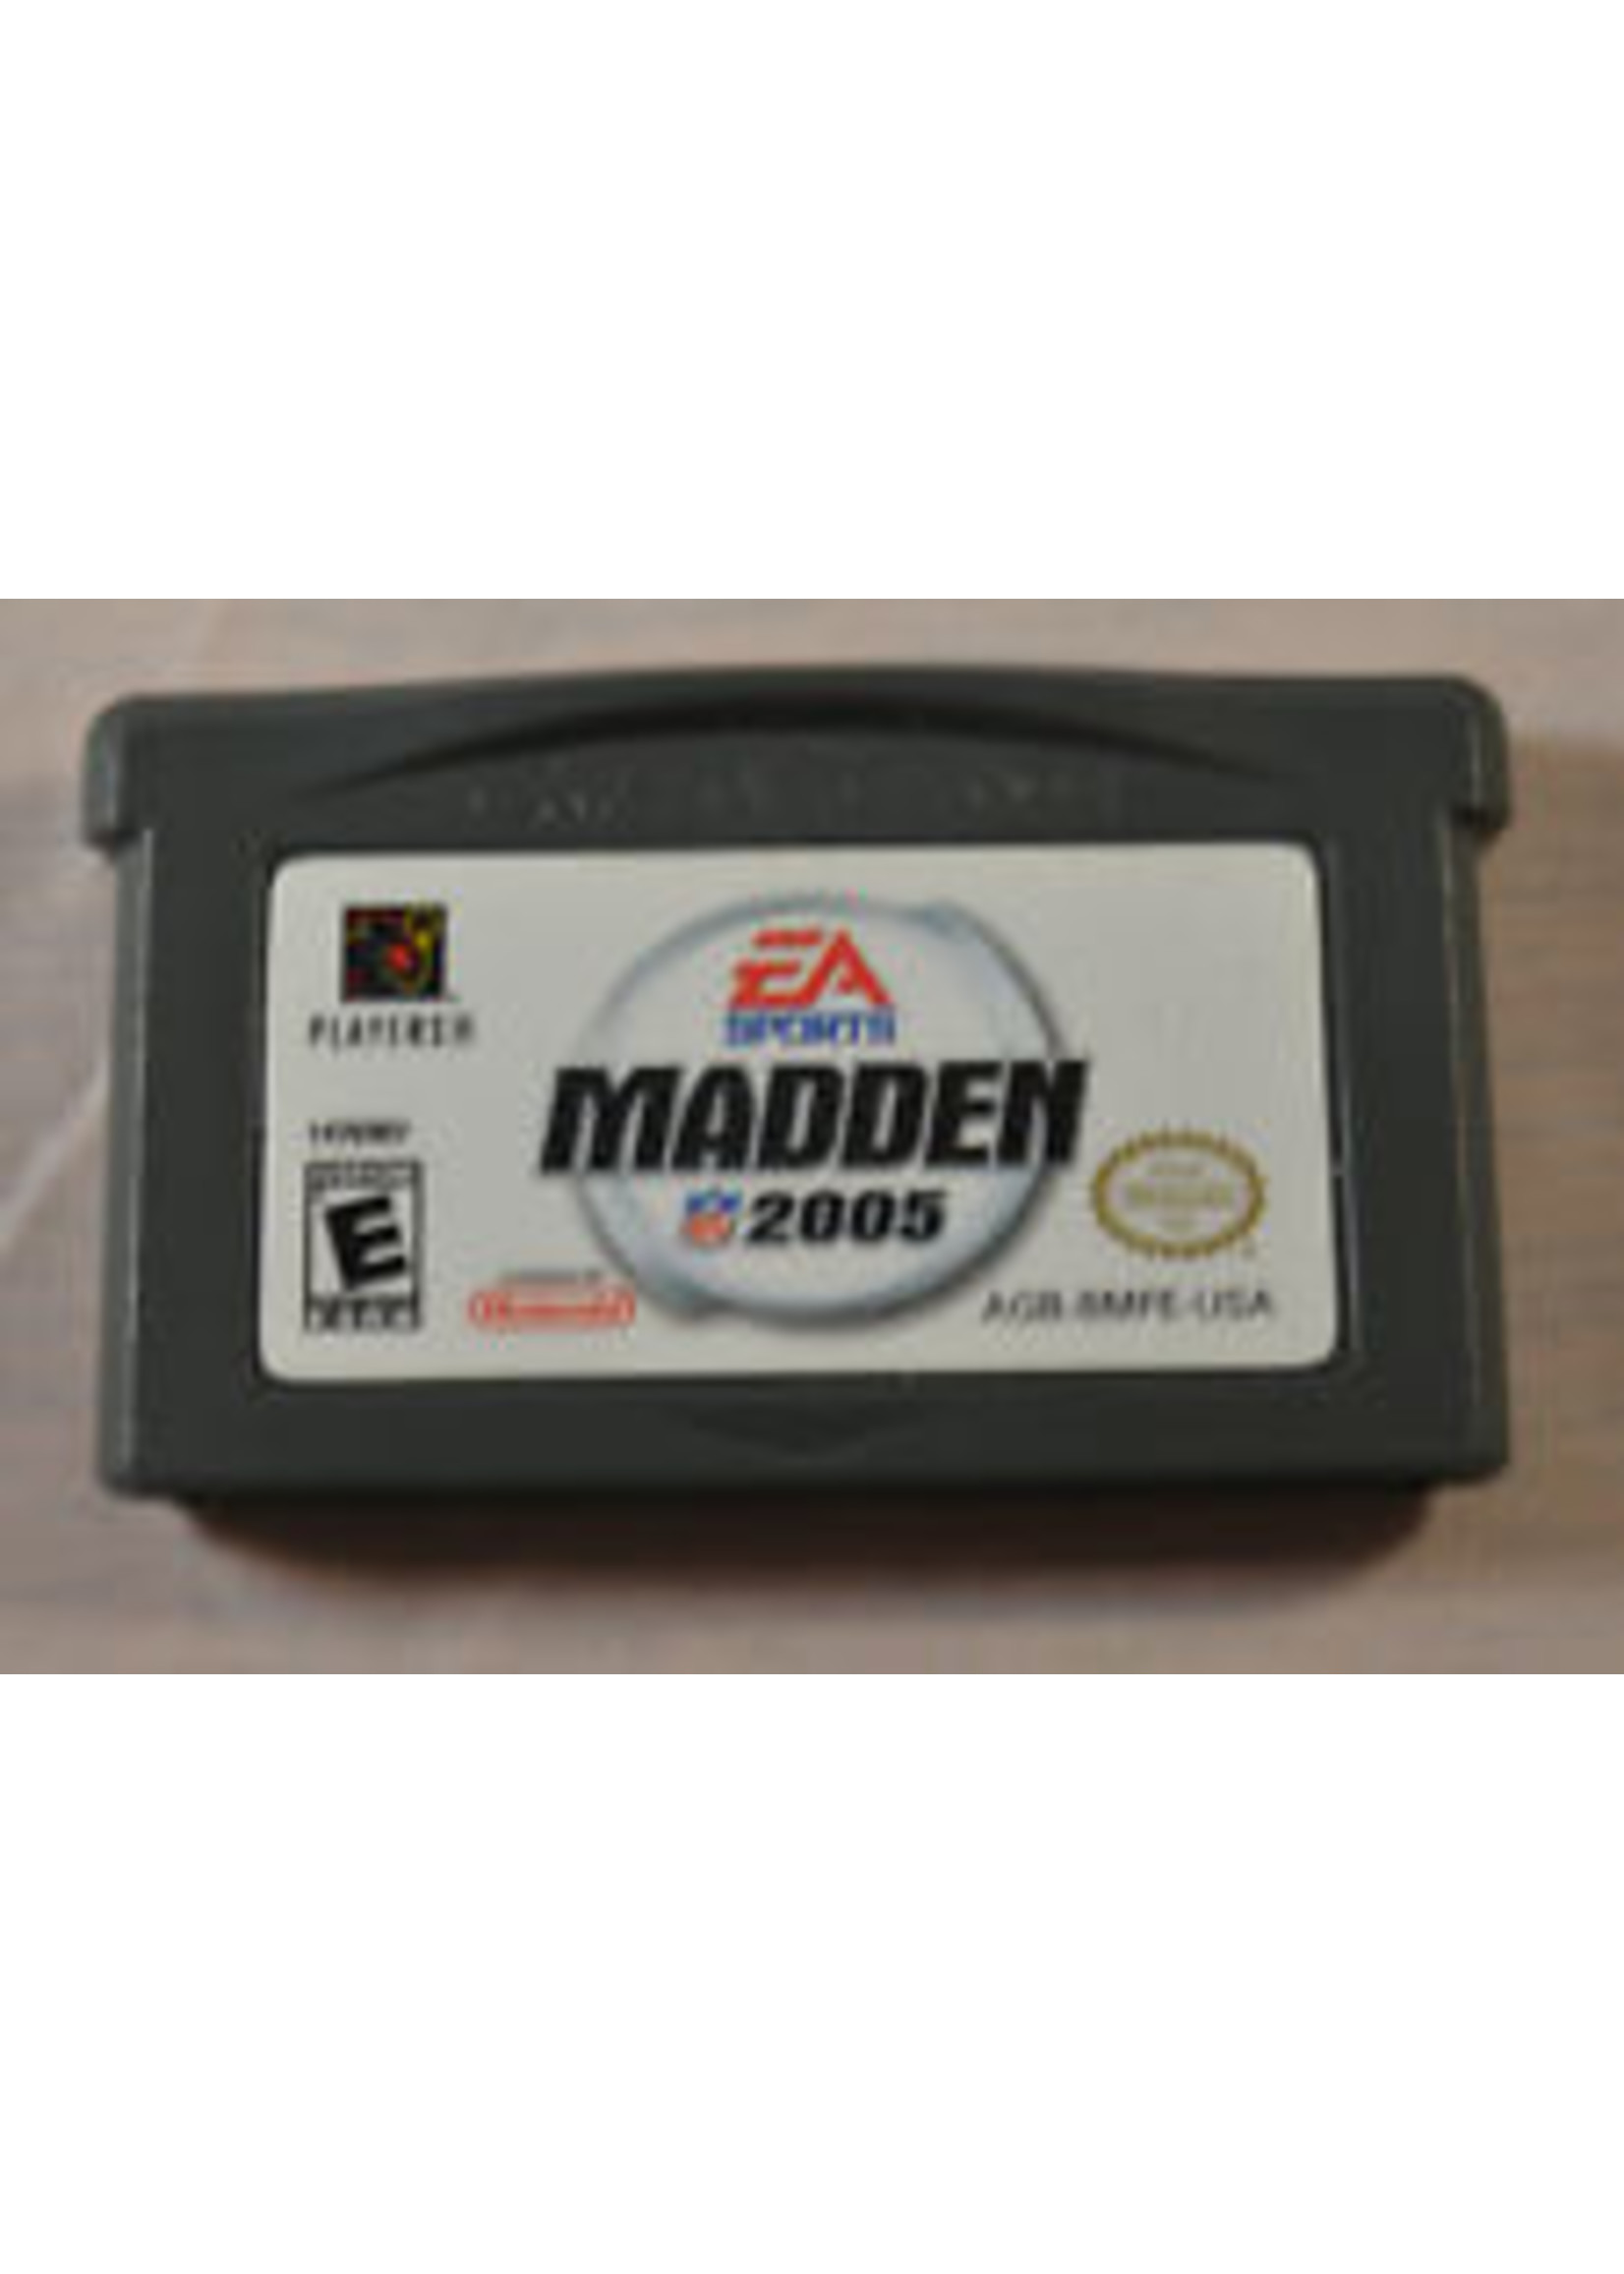 Nintendo Gameboy Advance Madden 2005